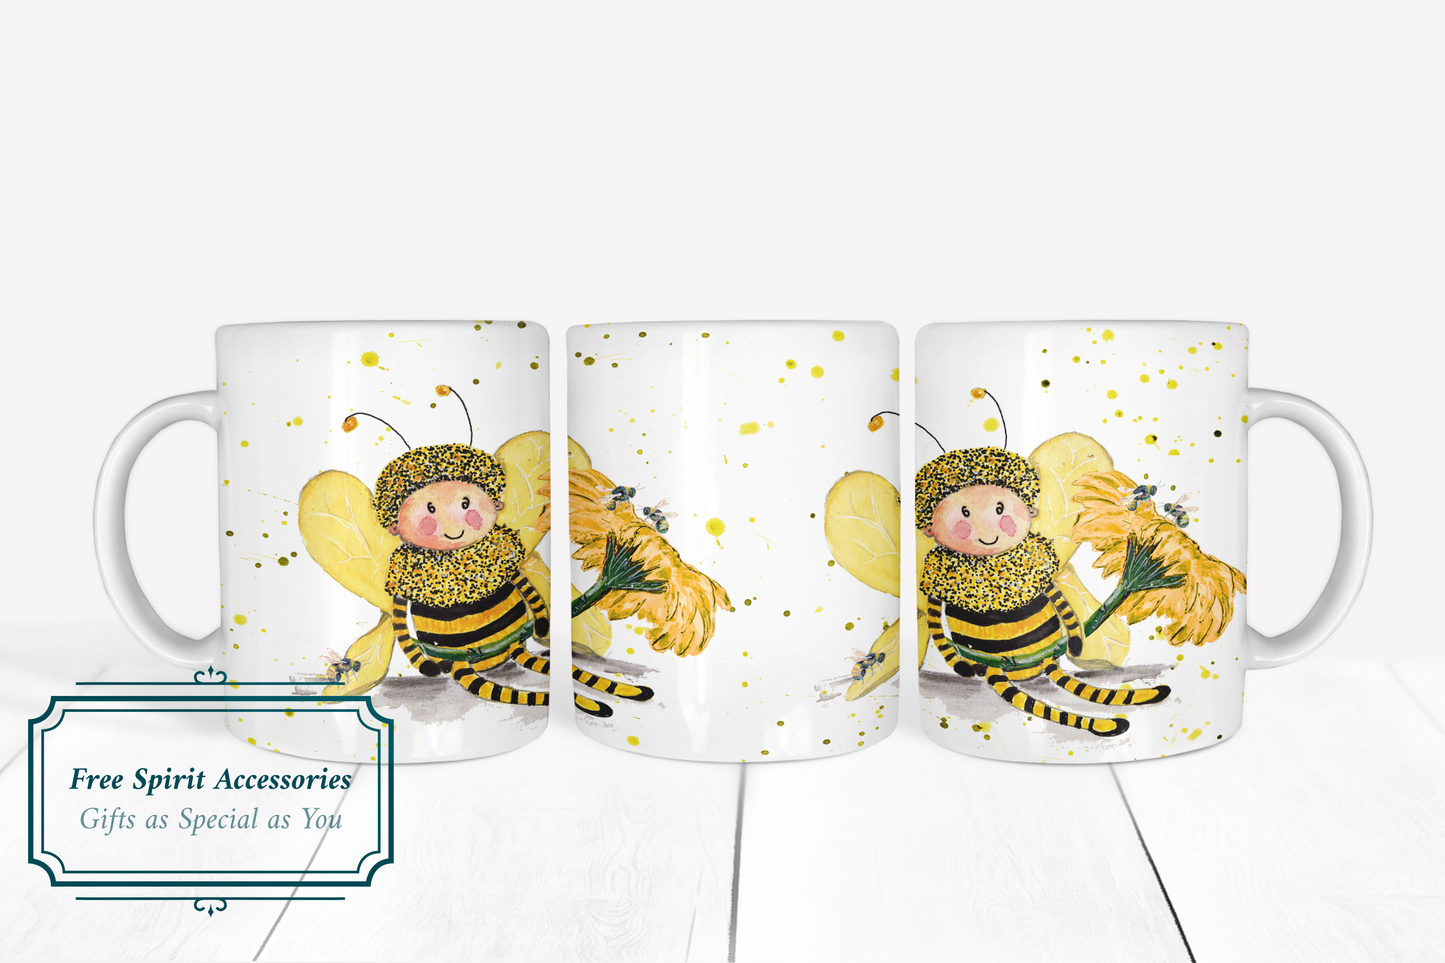  Cute Little Bumble Bee Mug by Free Spirit Accessories sold by Free Spirit Accessories